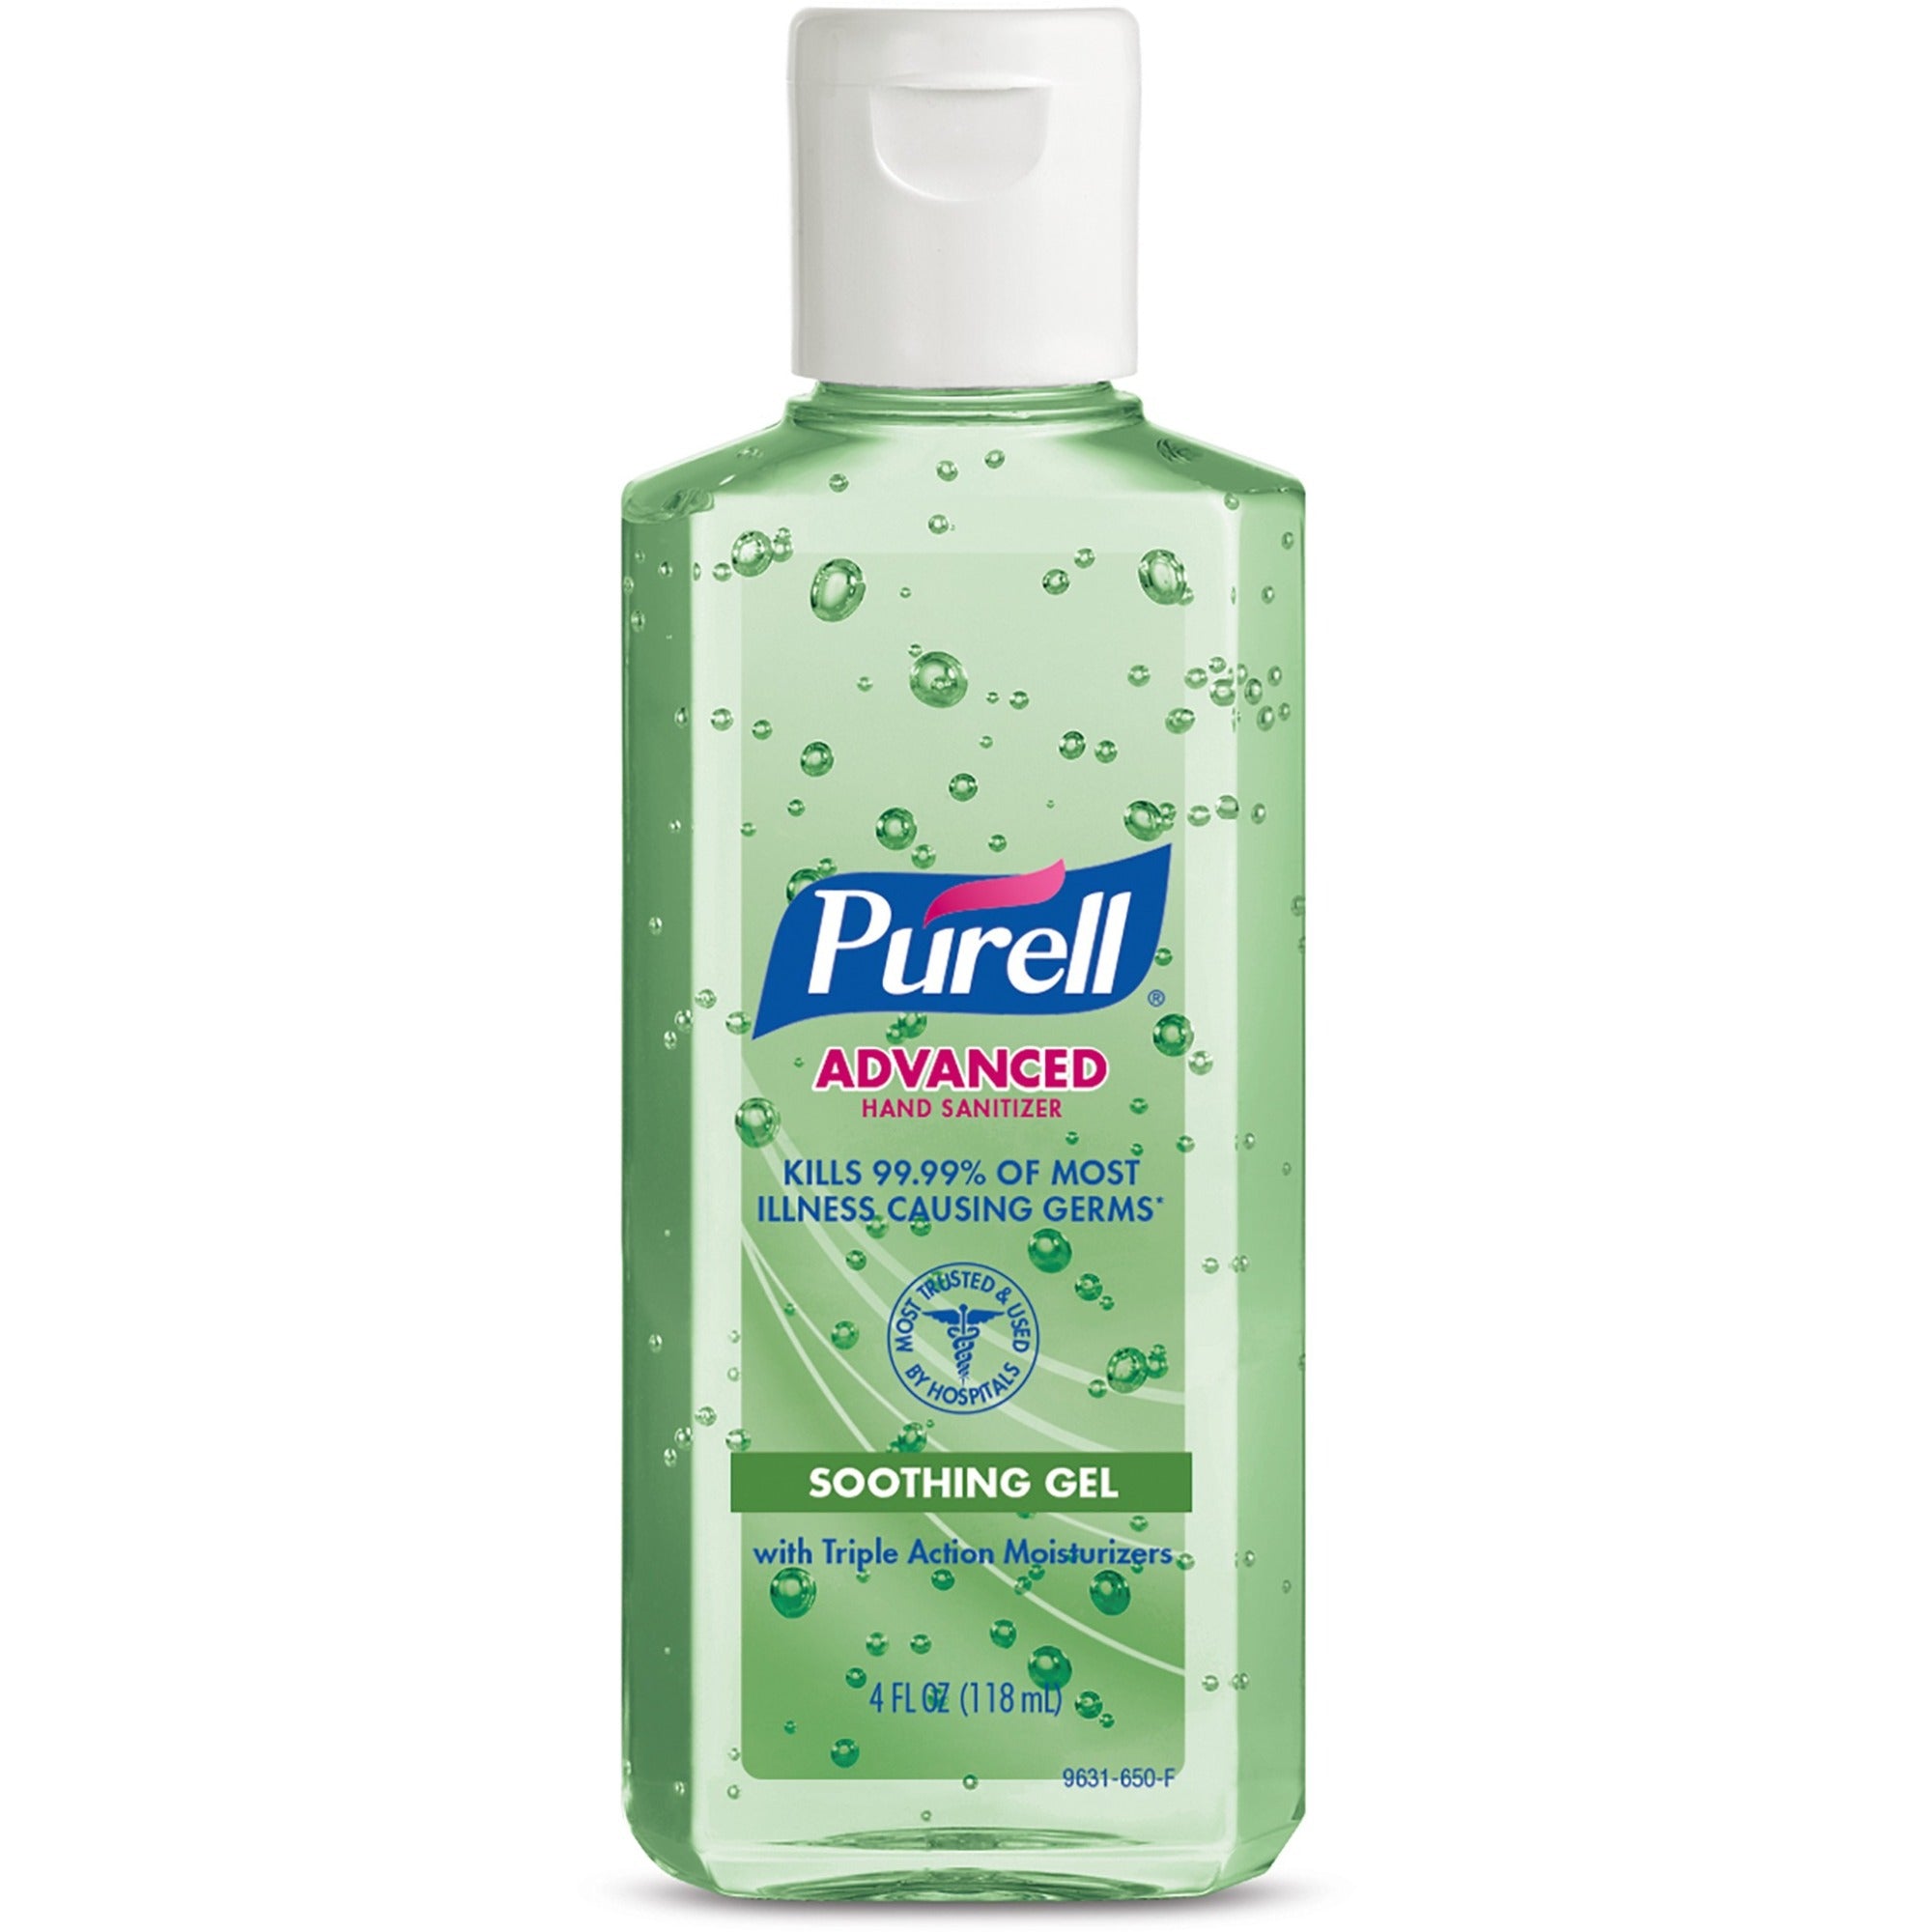 purell-advanced-hand-sanitizer-gel-floral-scent-4-fl-oz-1183-ml-squeeze-bottle-dispenser-kill-germs-hand-moisturizing-green-non-sticky-residue-free-moisturizing-1-each_goj963124 - 1